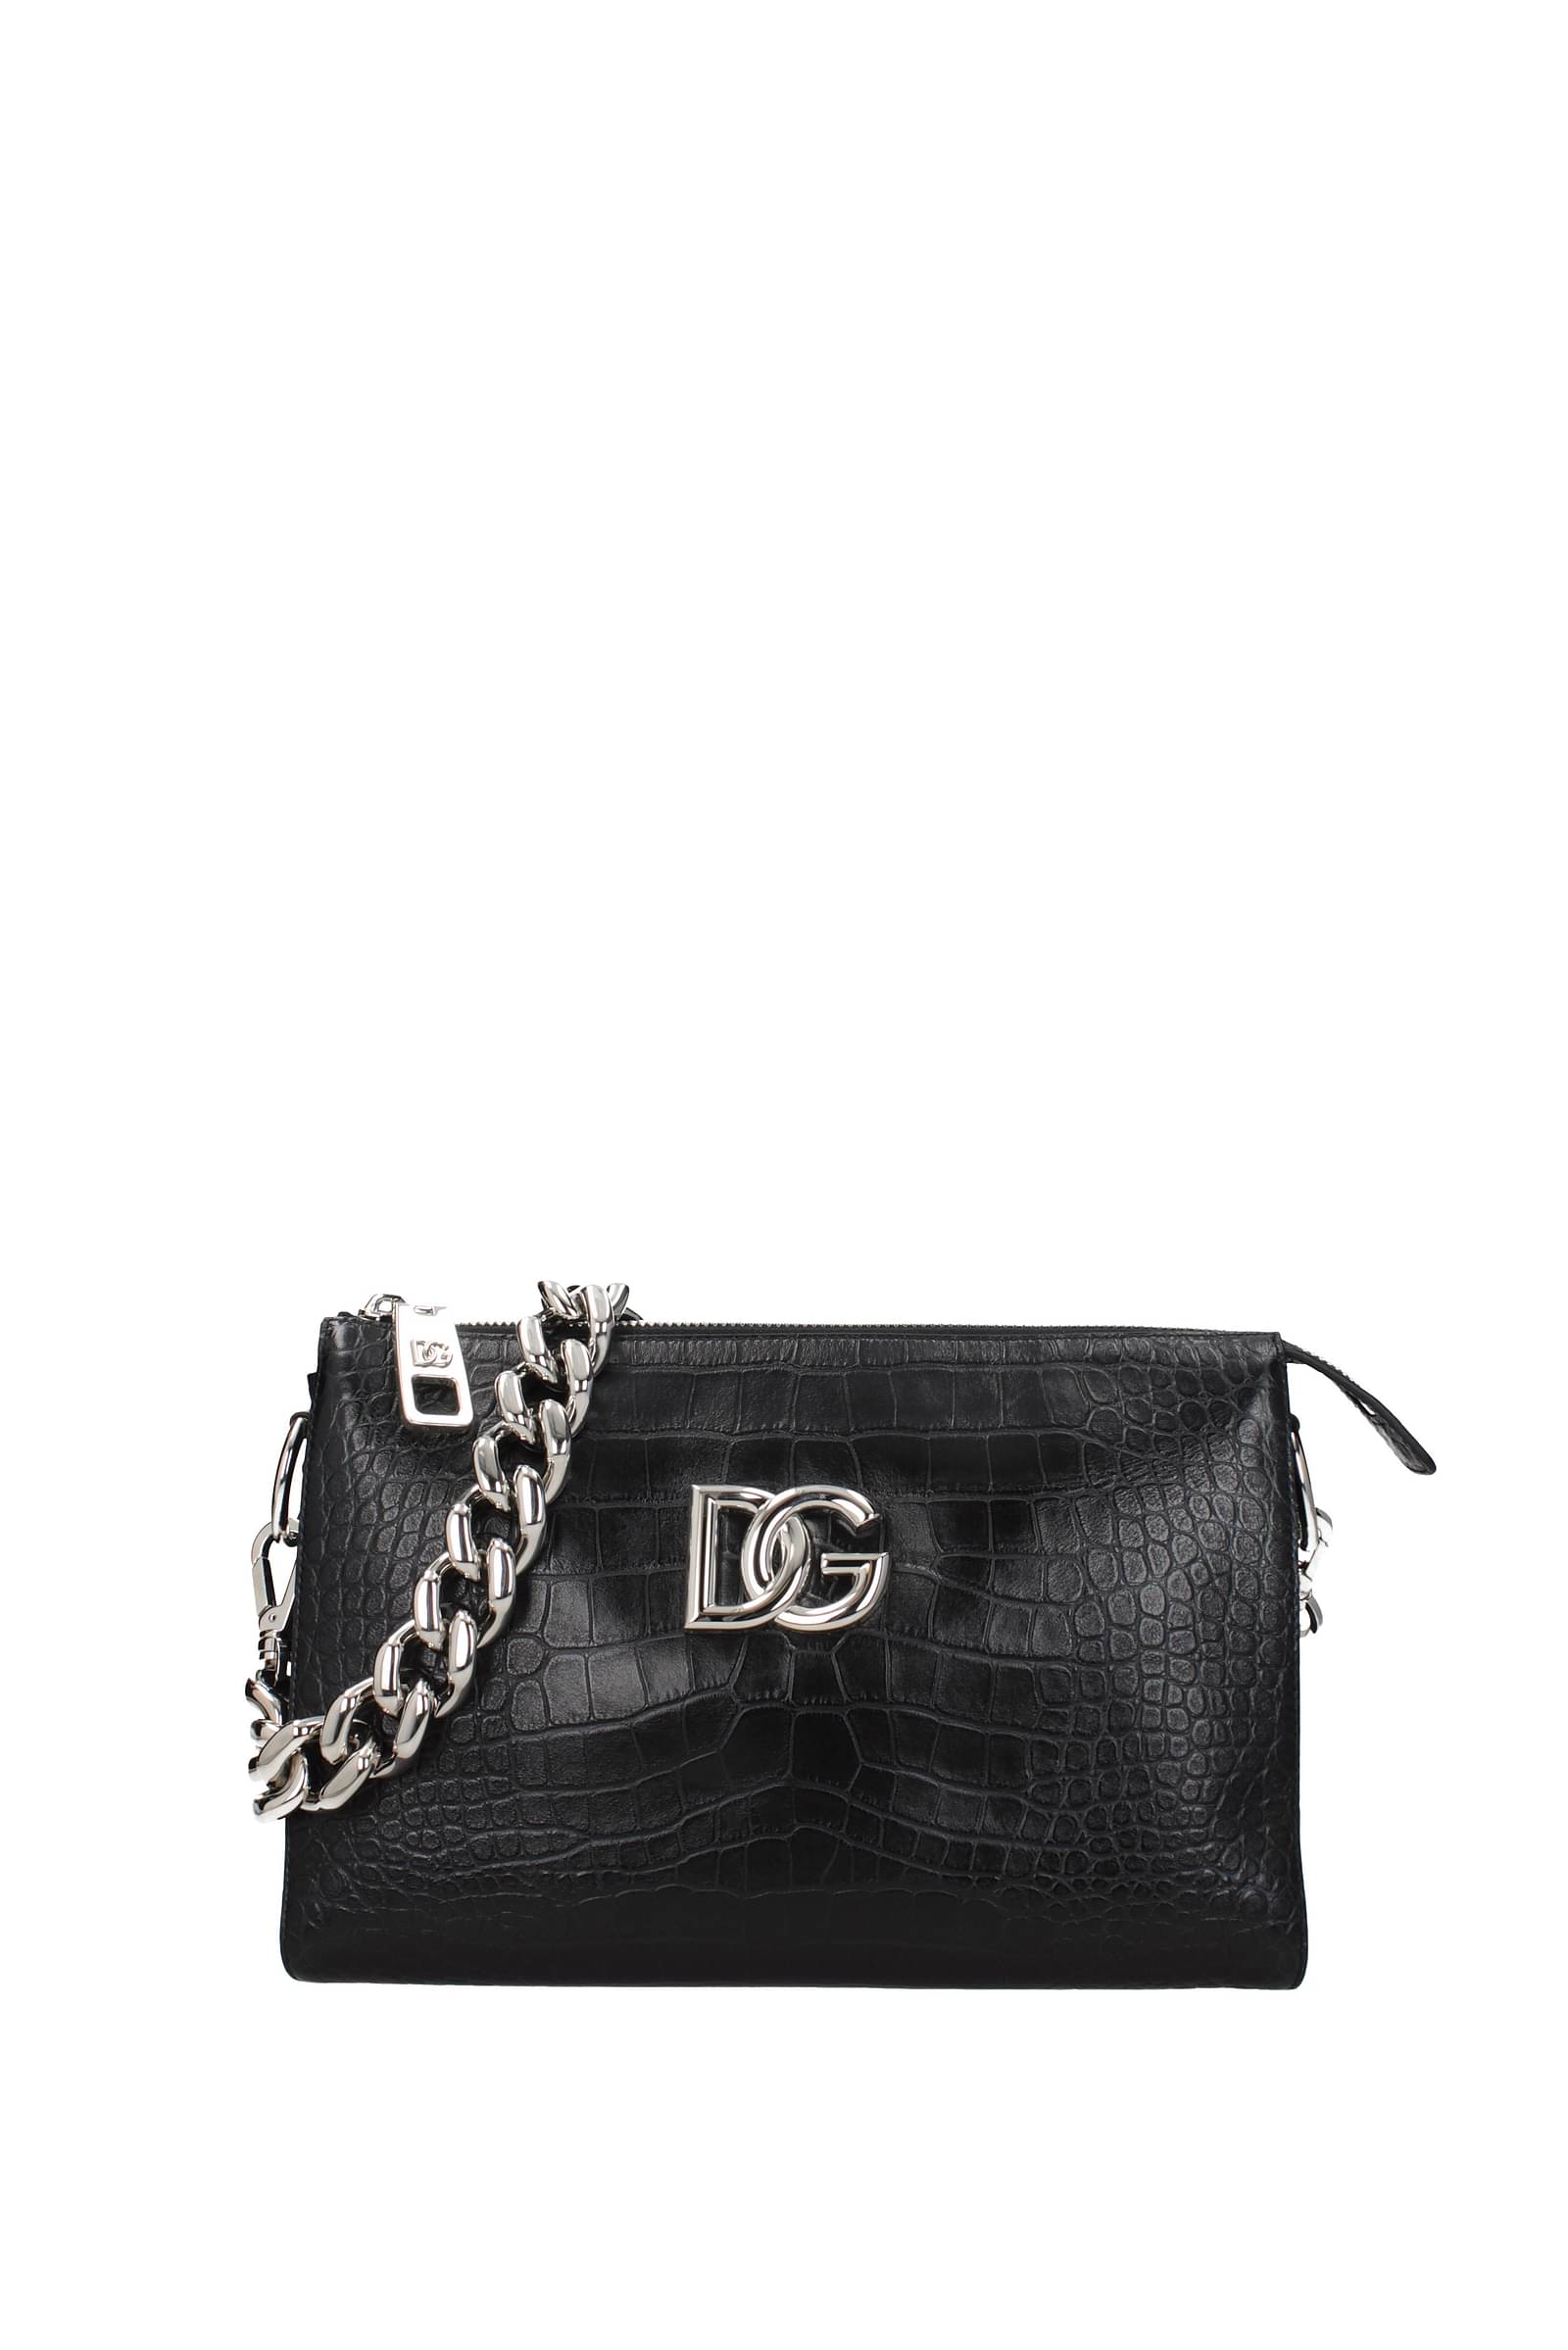 Dolce&Gabbana ショルダーバッグ 女性 BB7217AA44680999 皮革 黒 1023,75€